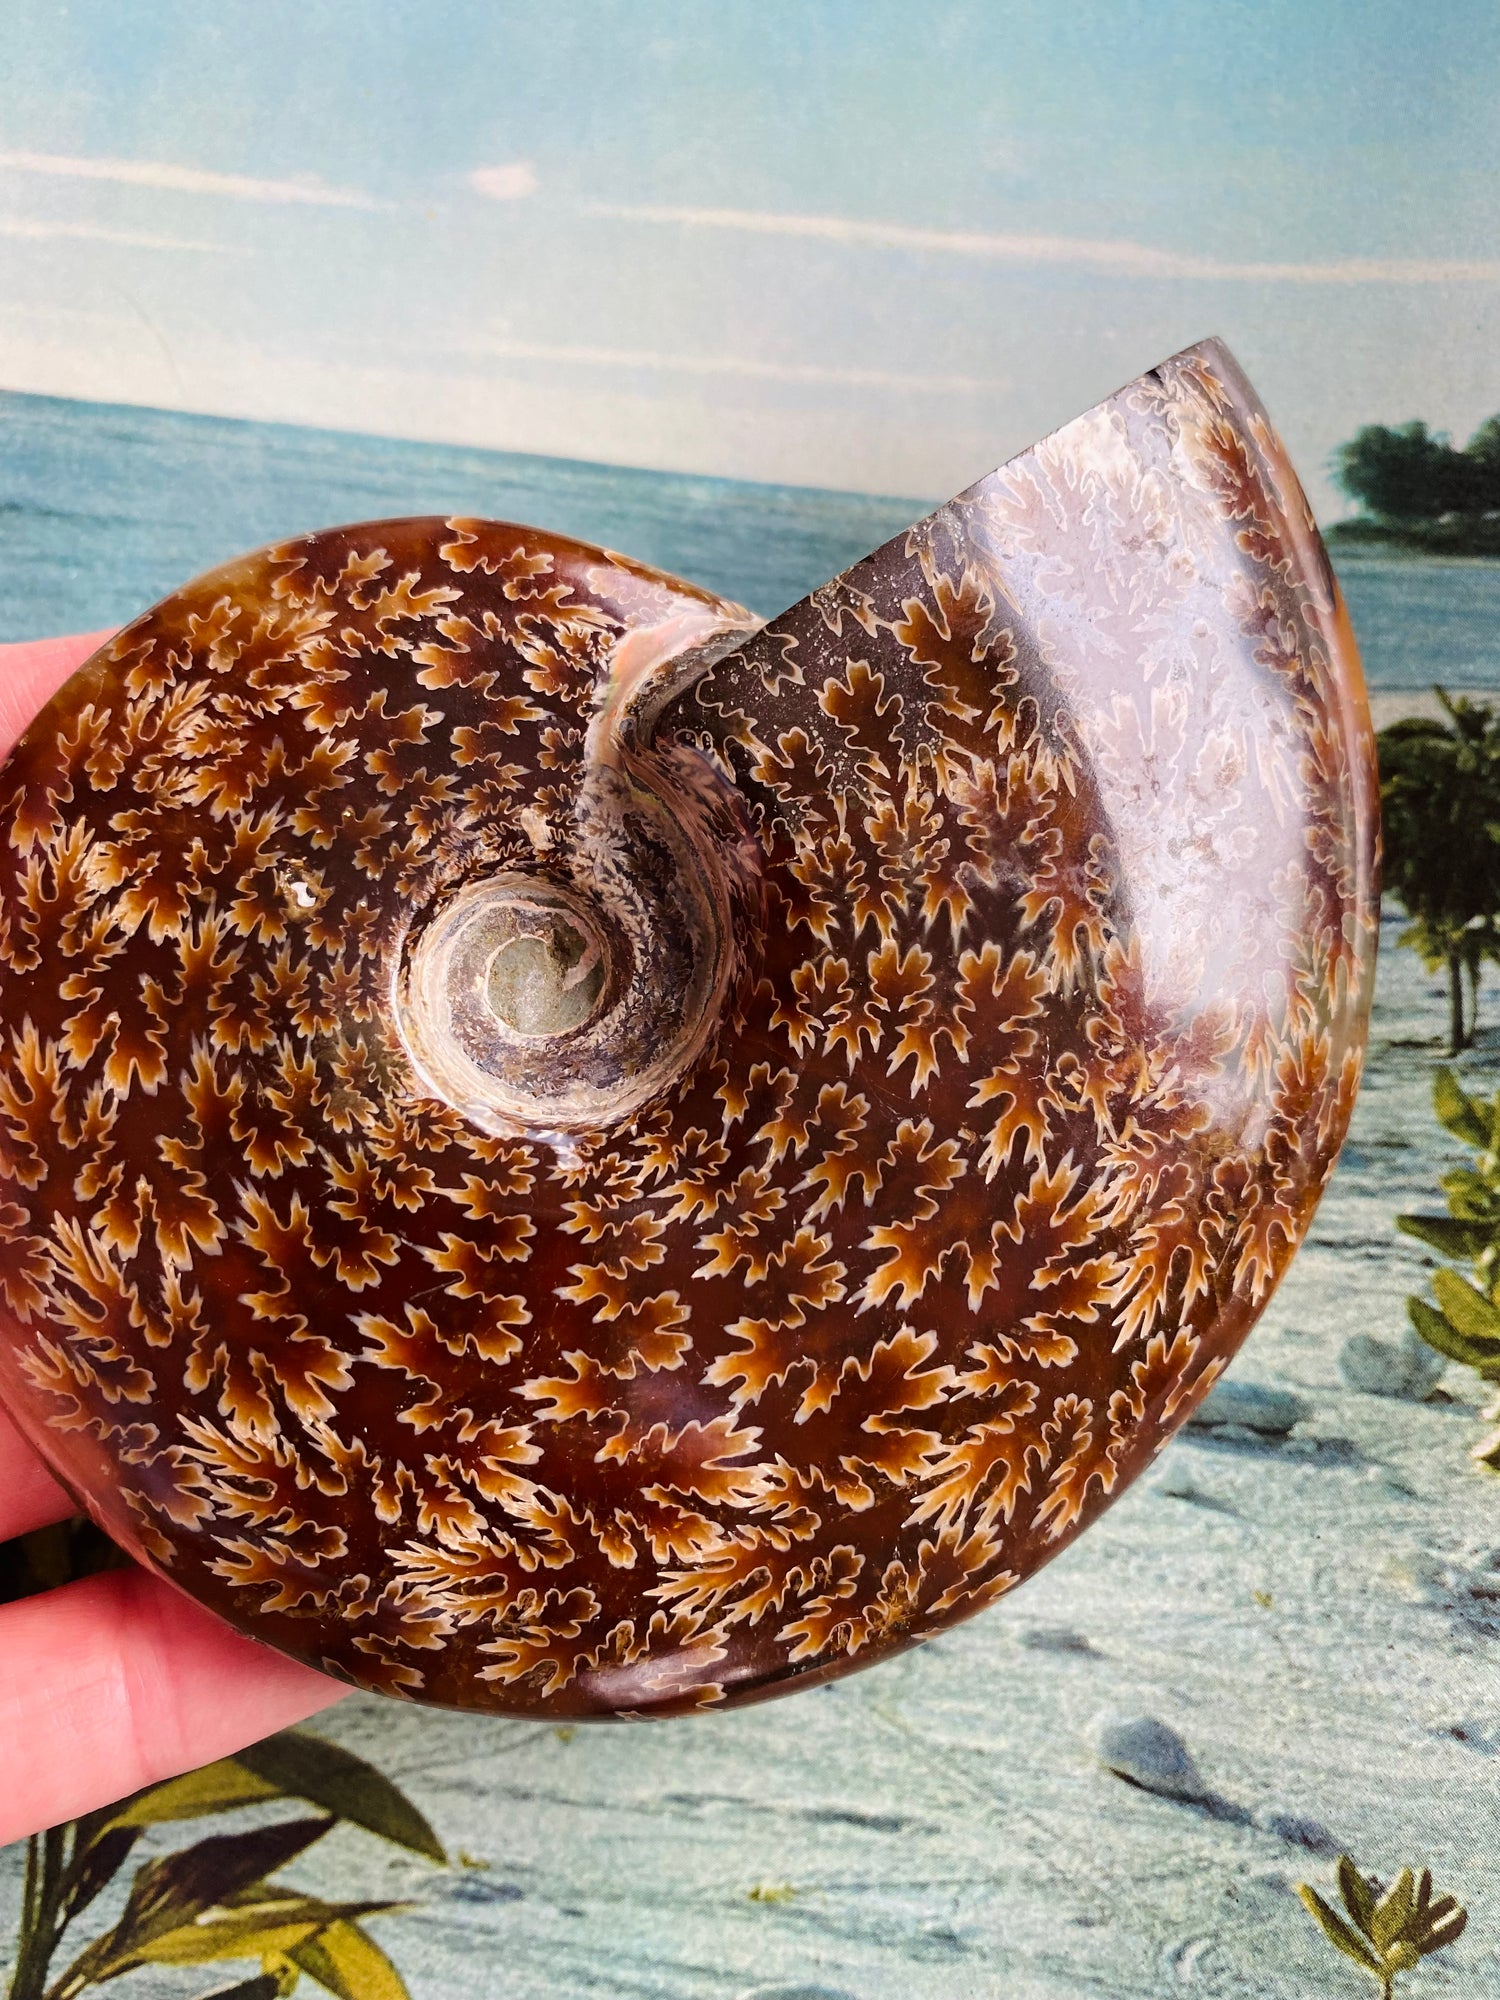 Polished Ammonite Fossil Madagascar 4.75"x4" - Moon Room Shop and Wellness